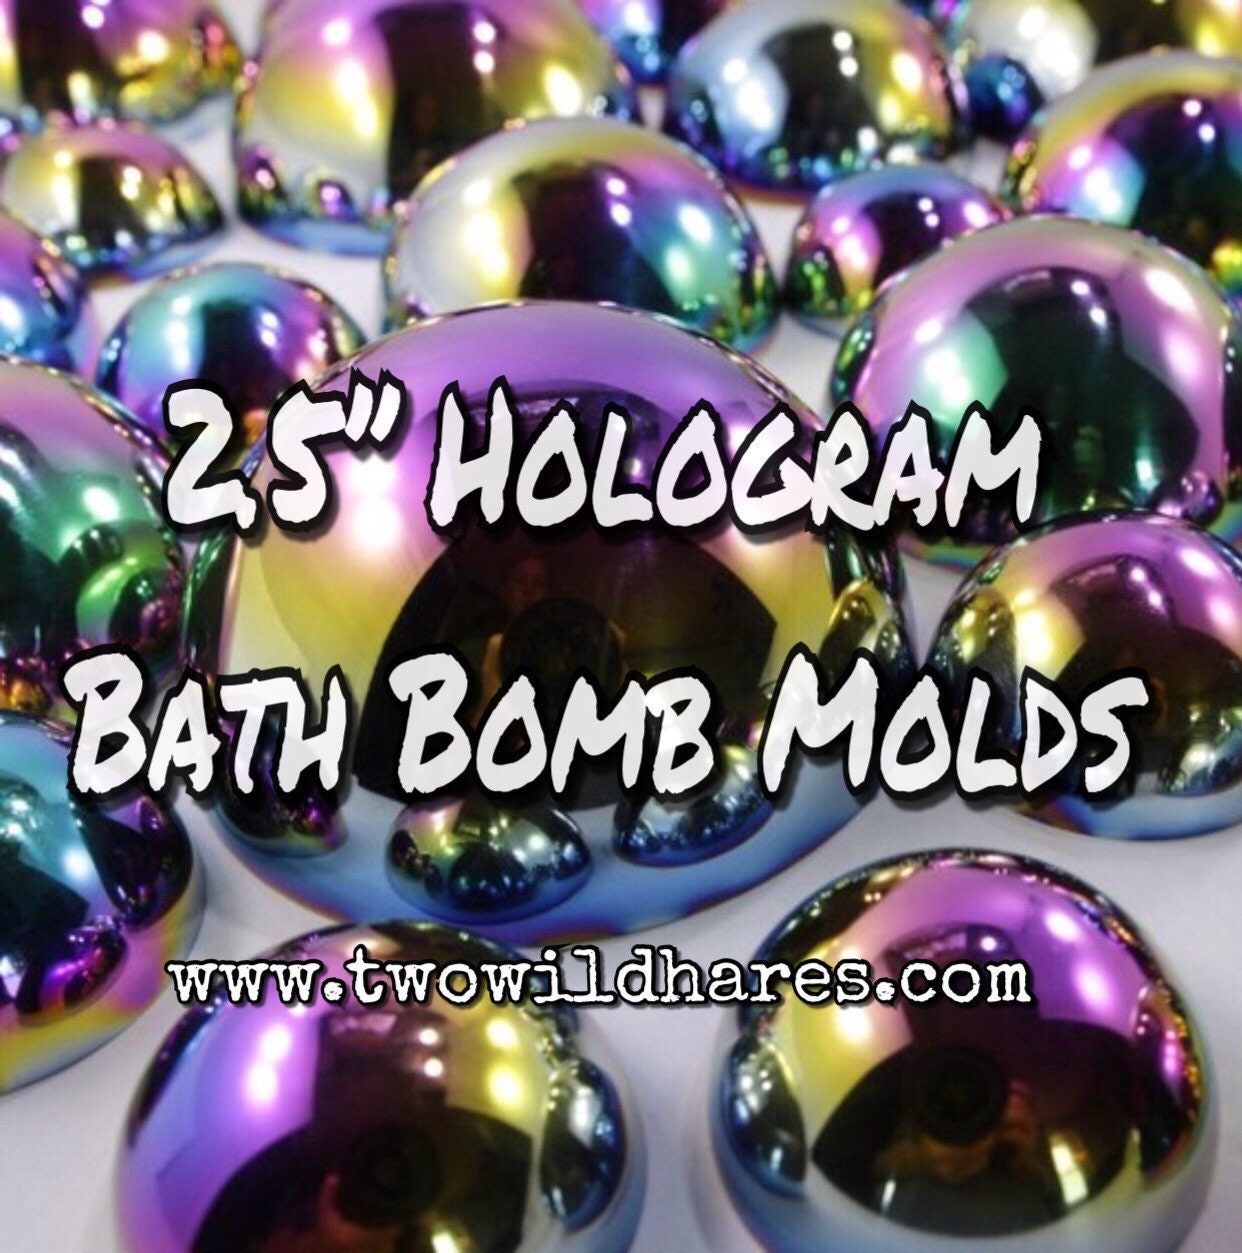 2.5 RAINBOW HOLOGRAPHIC Bath Bomb Molds, (63mm or 2.48) Heavy Duty